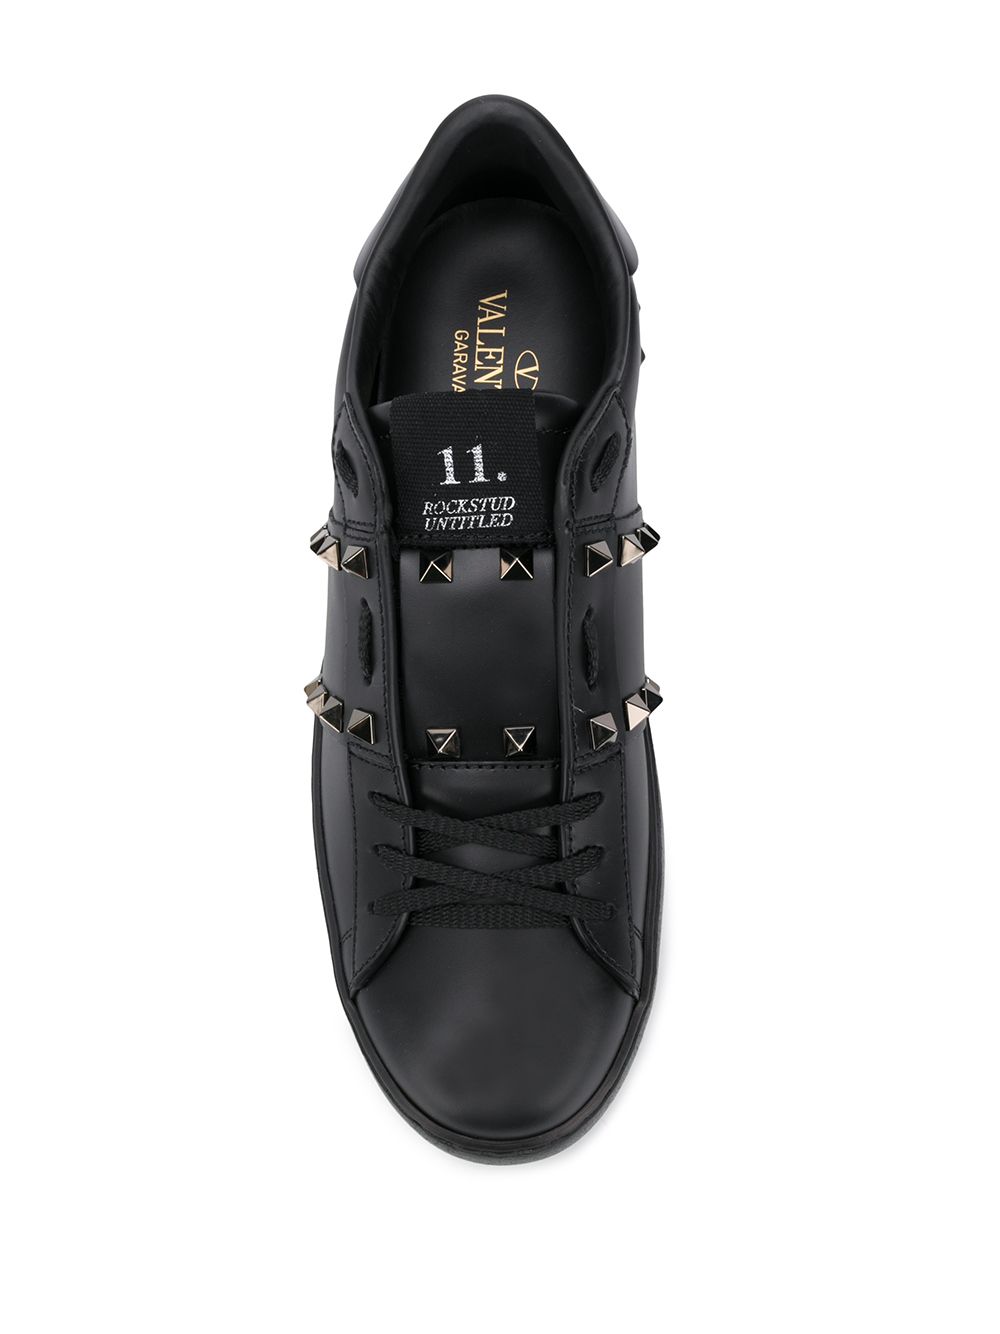 Black Untitled Rockstud leather sneakers